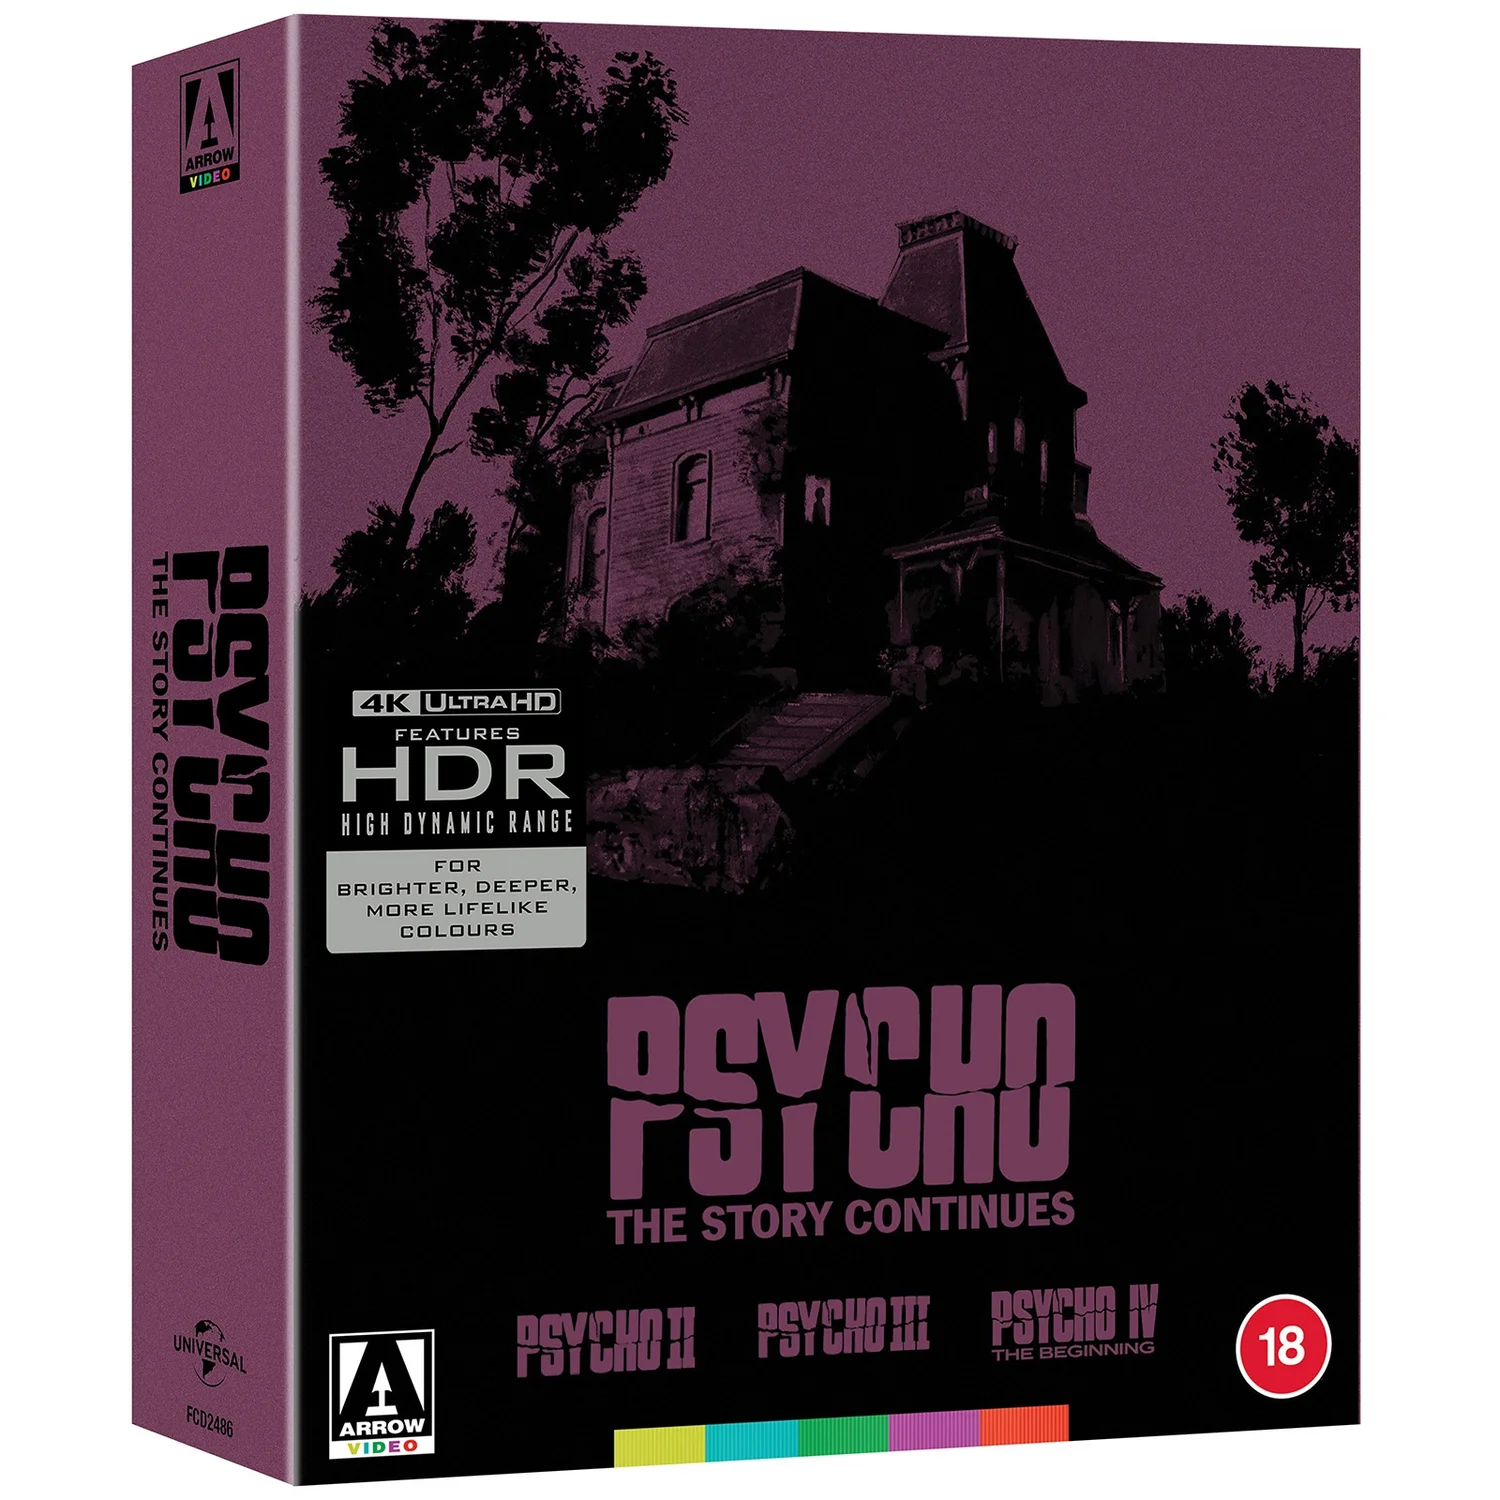 Psycho - La historia continúa: Psycho II, Psycho III, Psycho IV: El comienzo 4K UHD